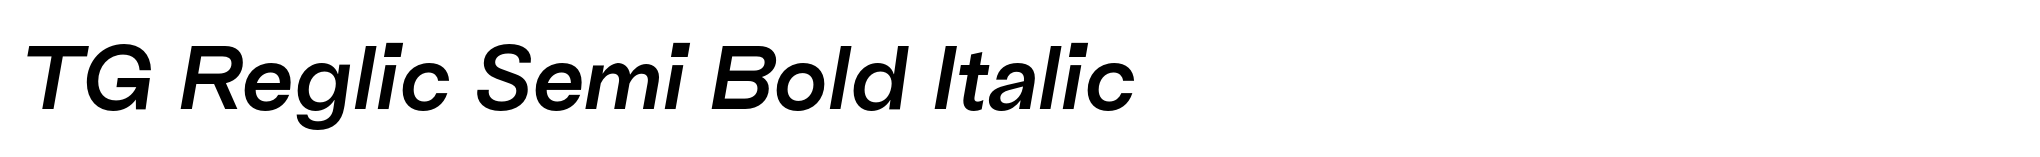 TG Reglic Semi Bold Italic image